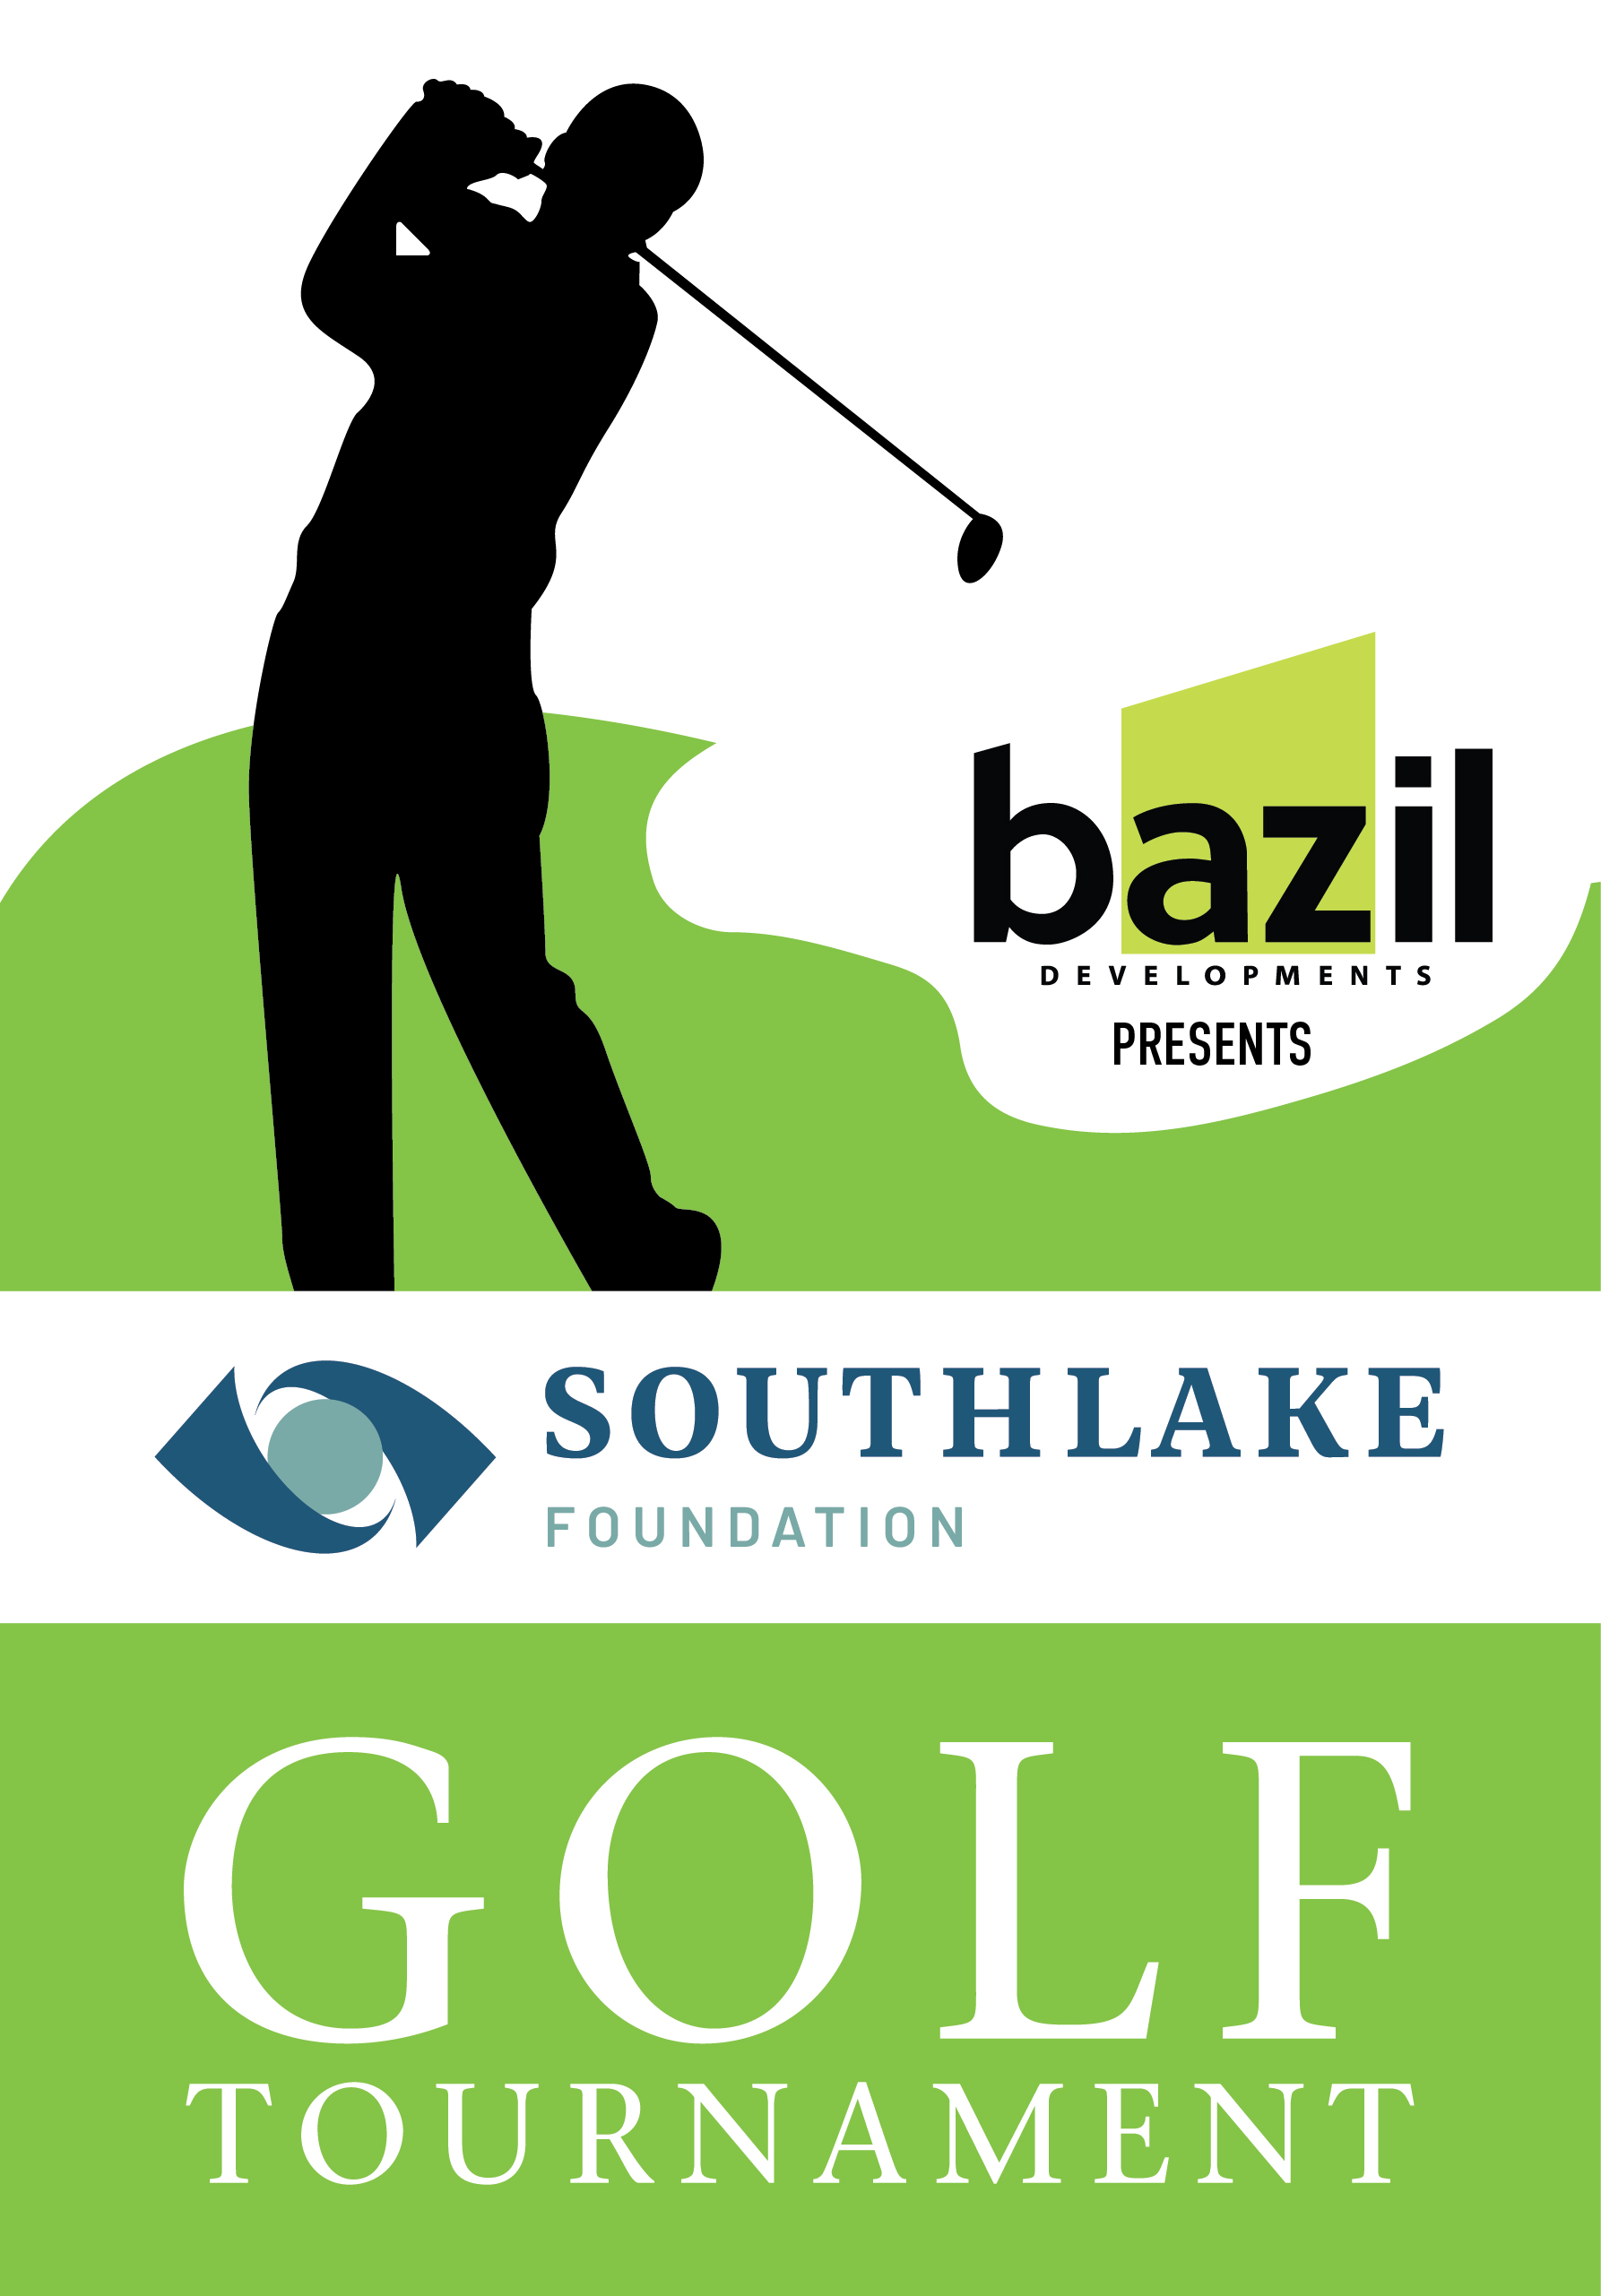 Bazil developments presents Southlake Foundation Golf Tournament